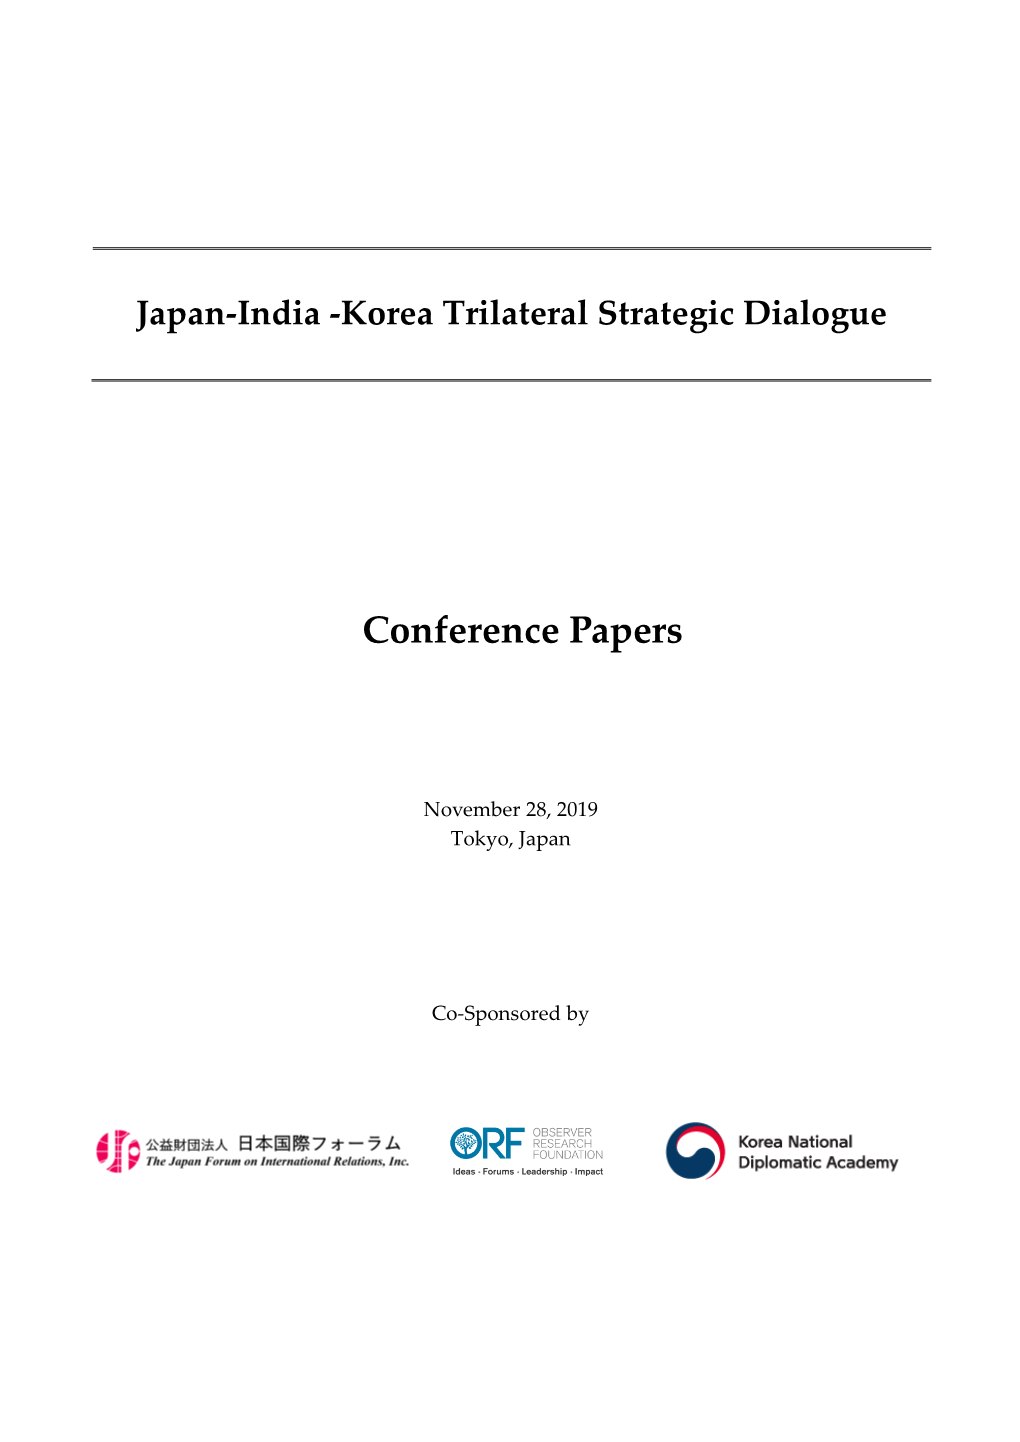 Japan-India-Korea Trilateral Strategic Dialogue Draft Program